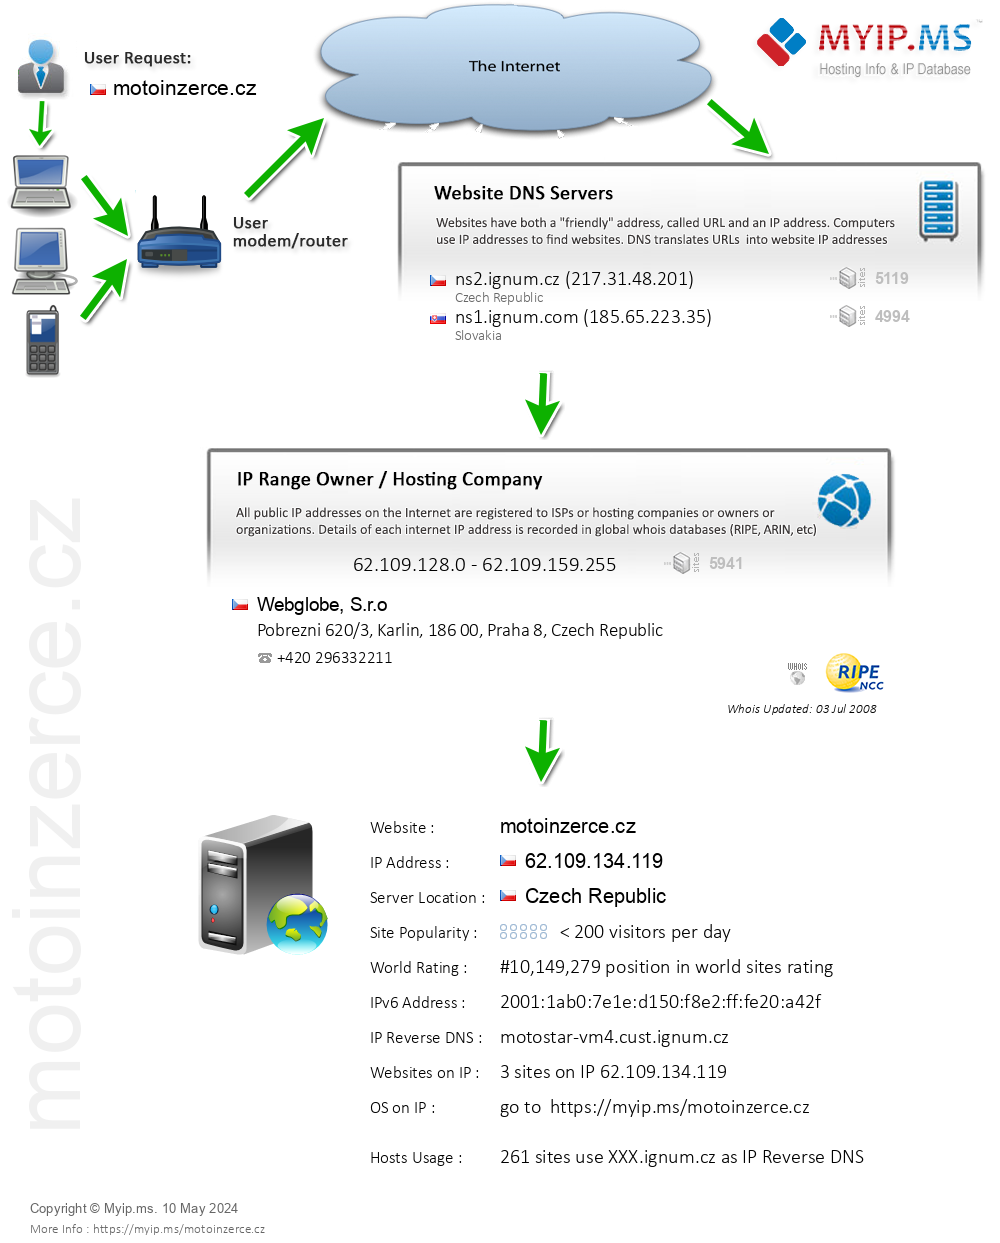 Motoinzerce.cz - Website Hosting Visual IP Diagram